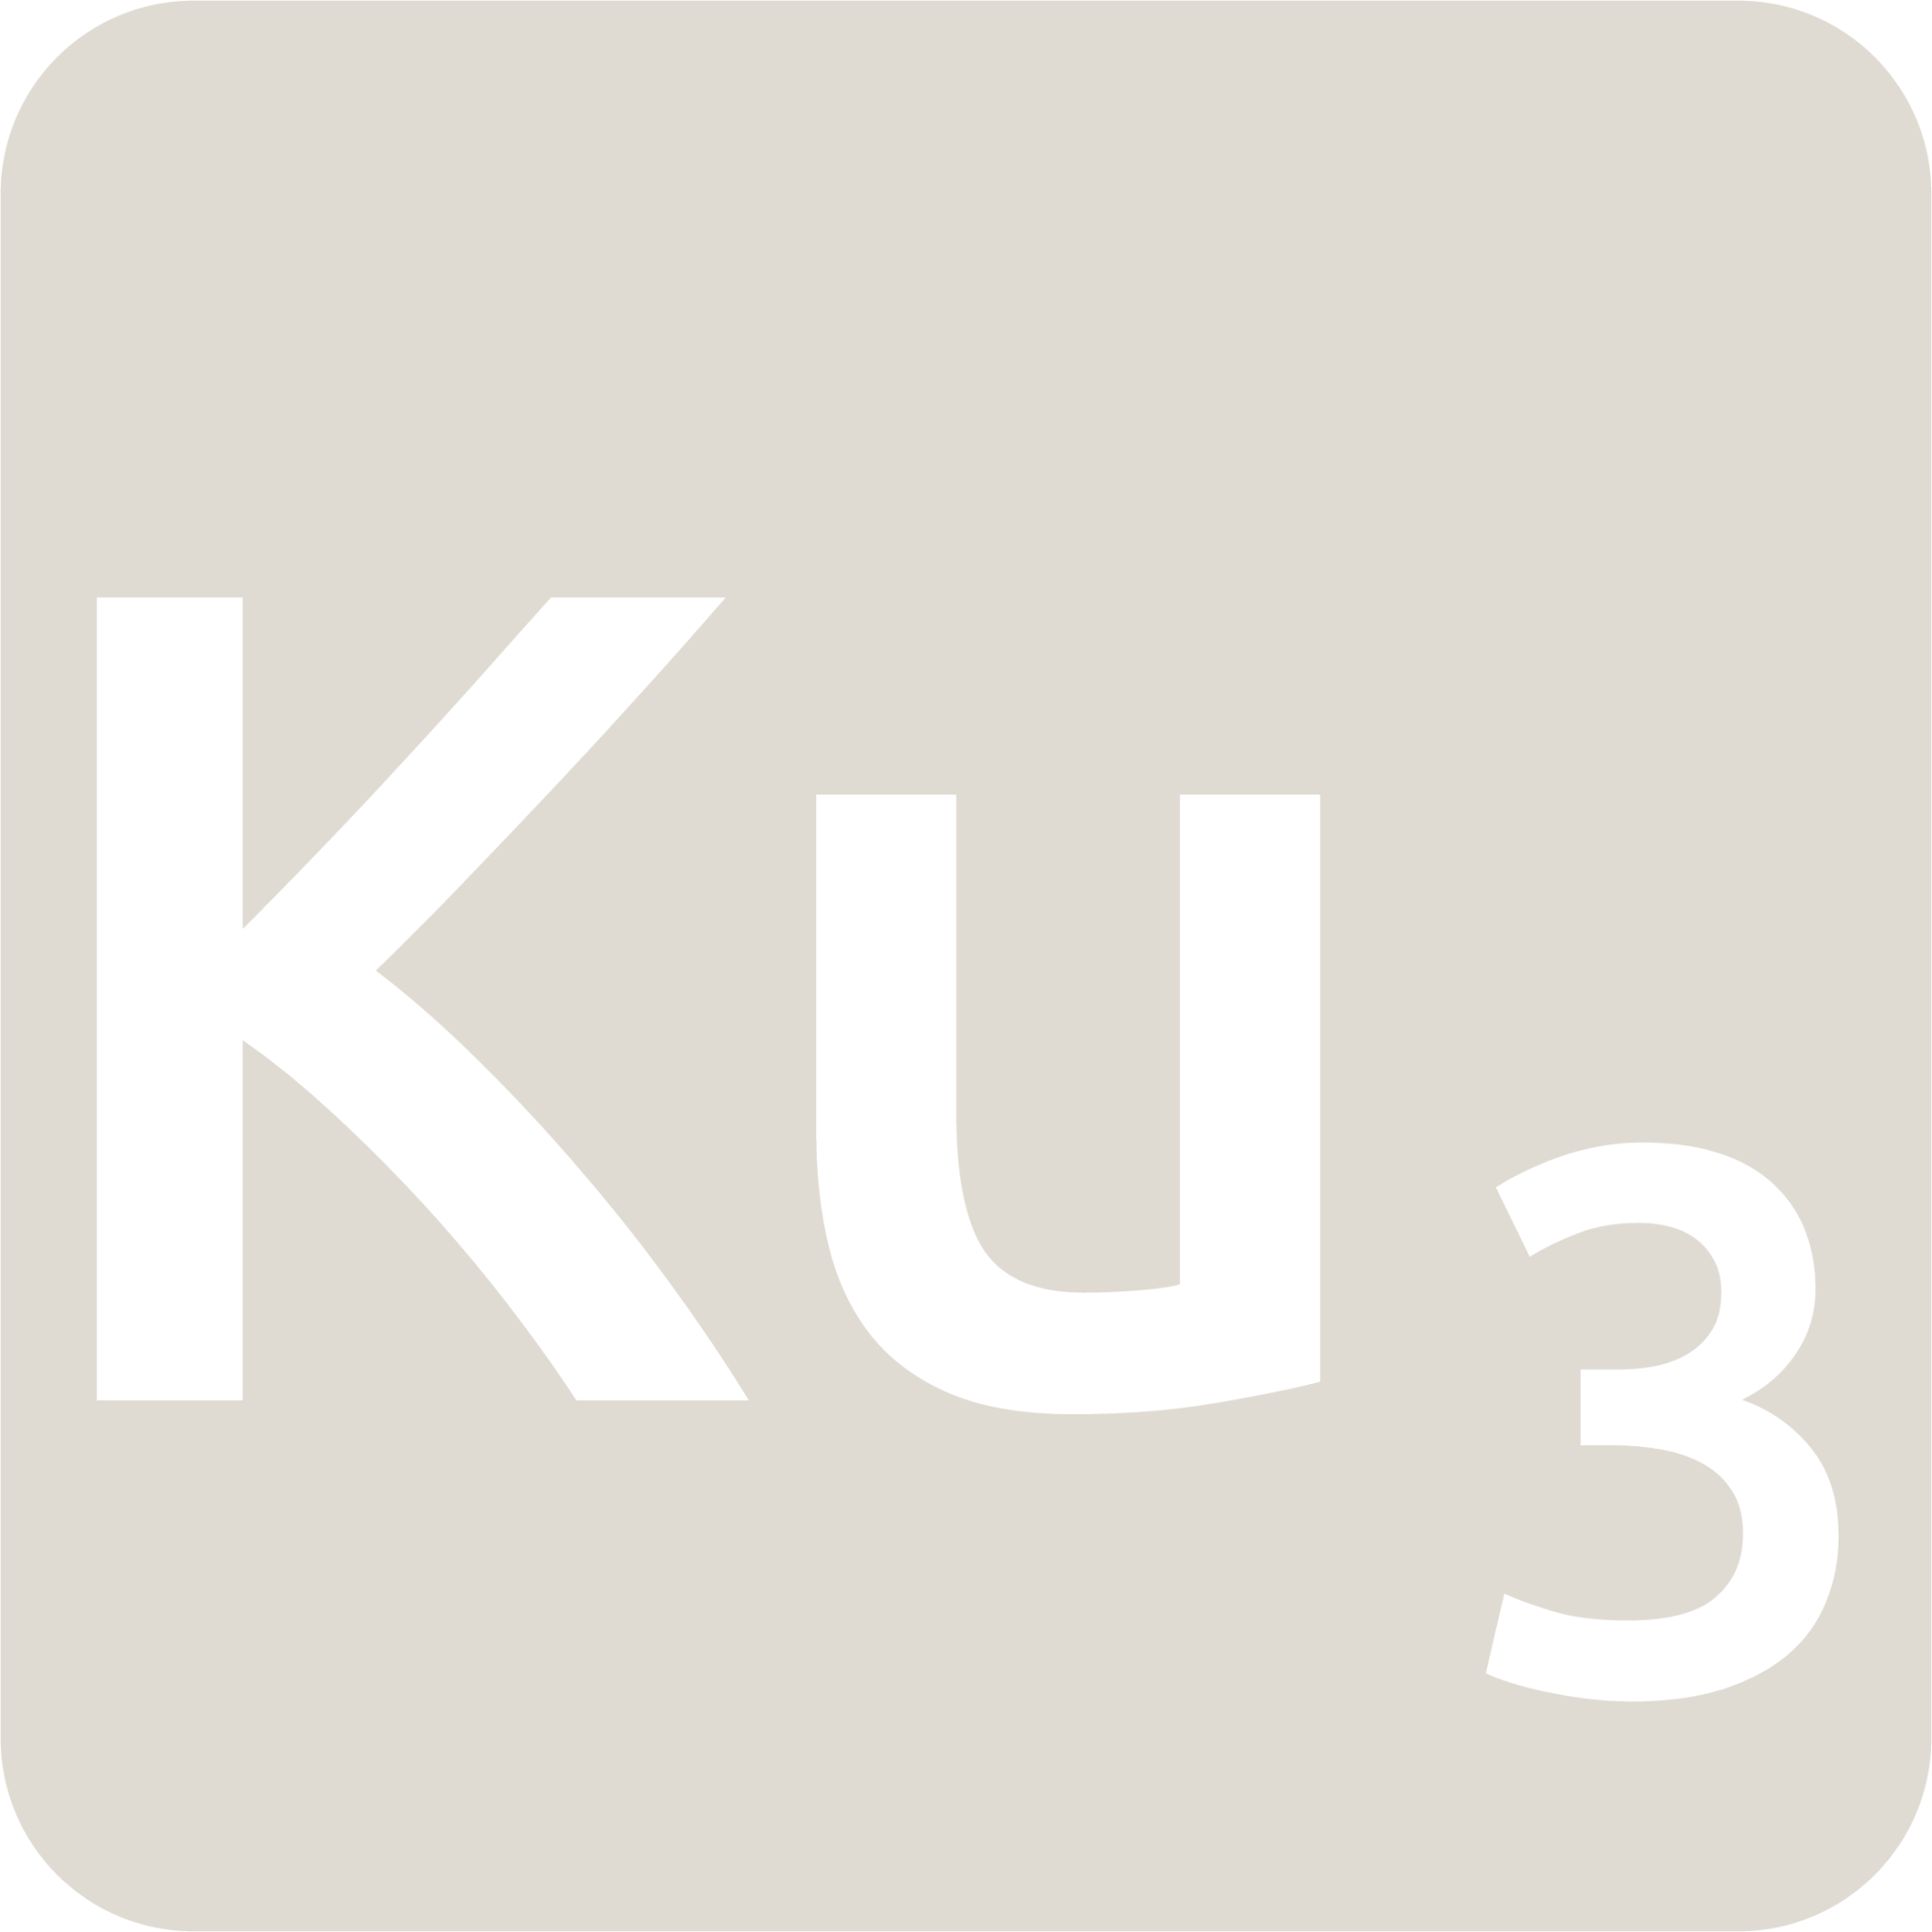 indicator keyboard Ku 3 icon